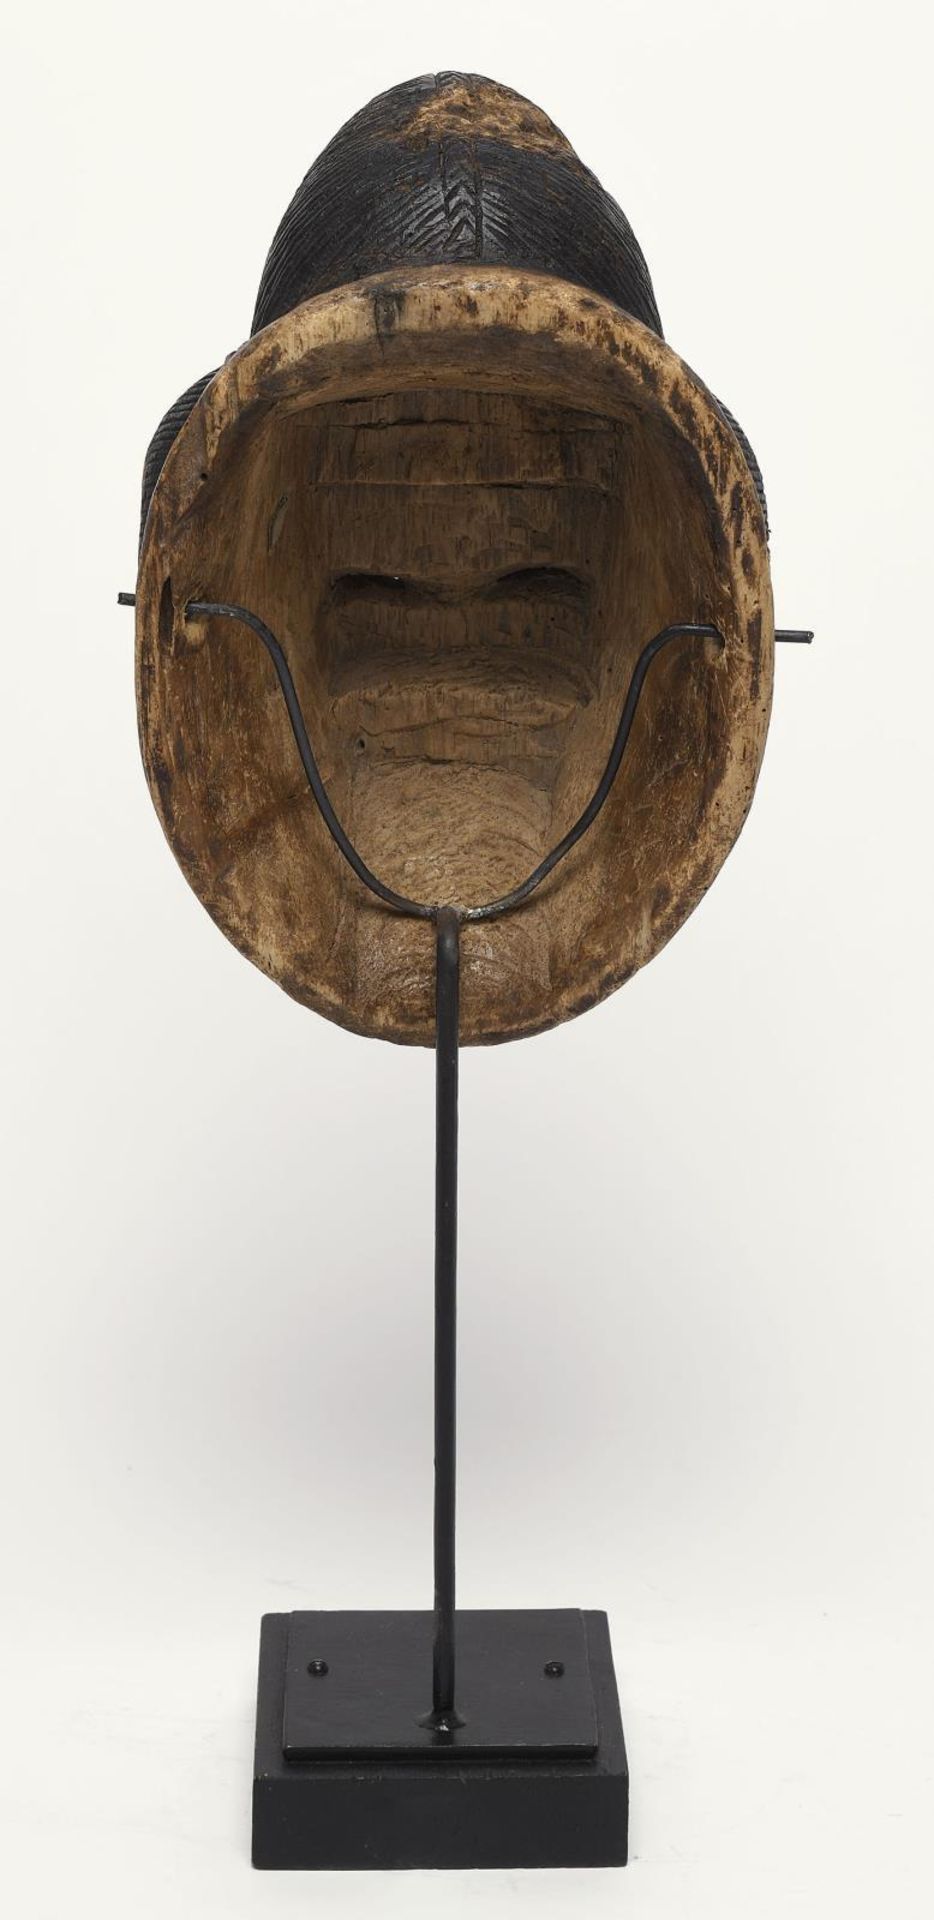 Maske "Okuyi". Punu (bzw. Bapunu), Gabun oder Republik Kongo | Holz, geschnitzt, schwarz, weiß un... - Image 2 of 2